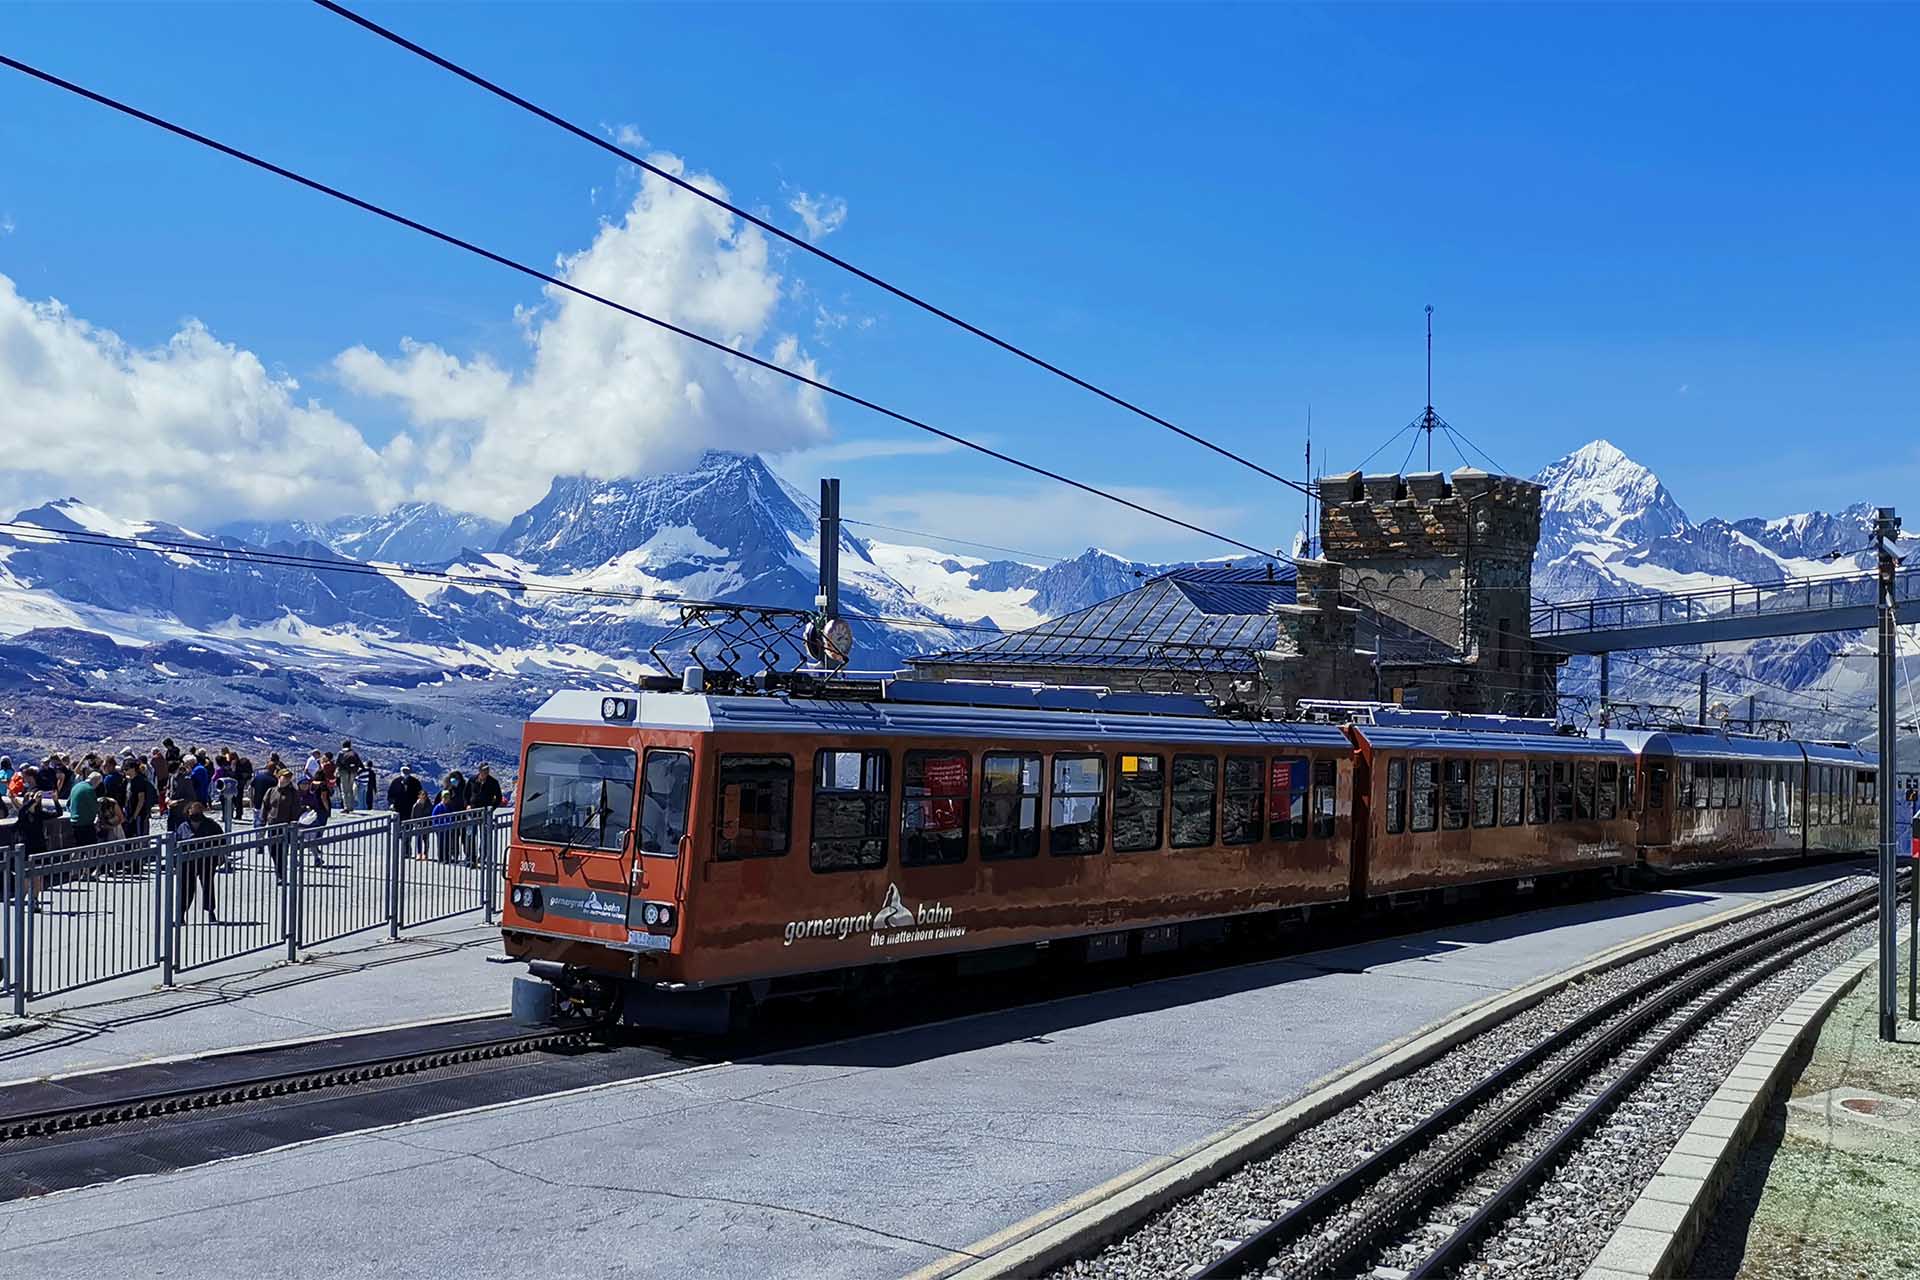 The Gornergrat railway with the Matterhorn in the background.